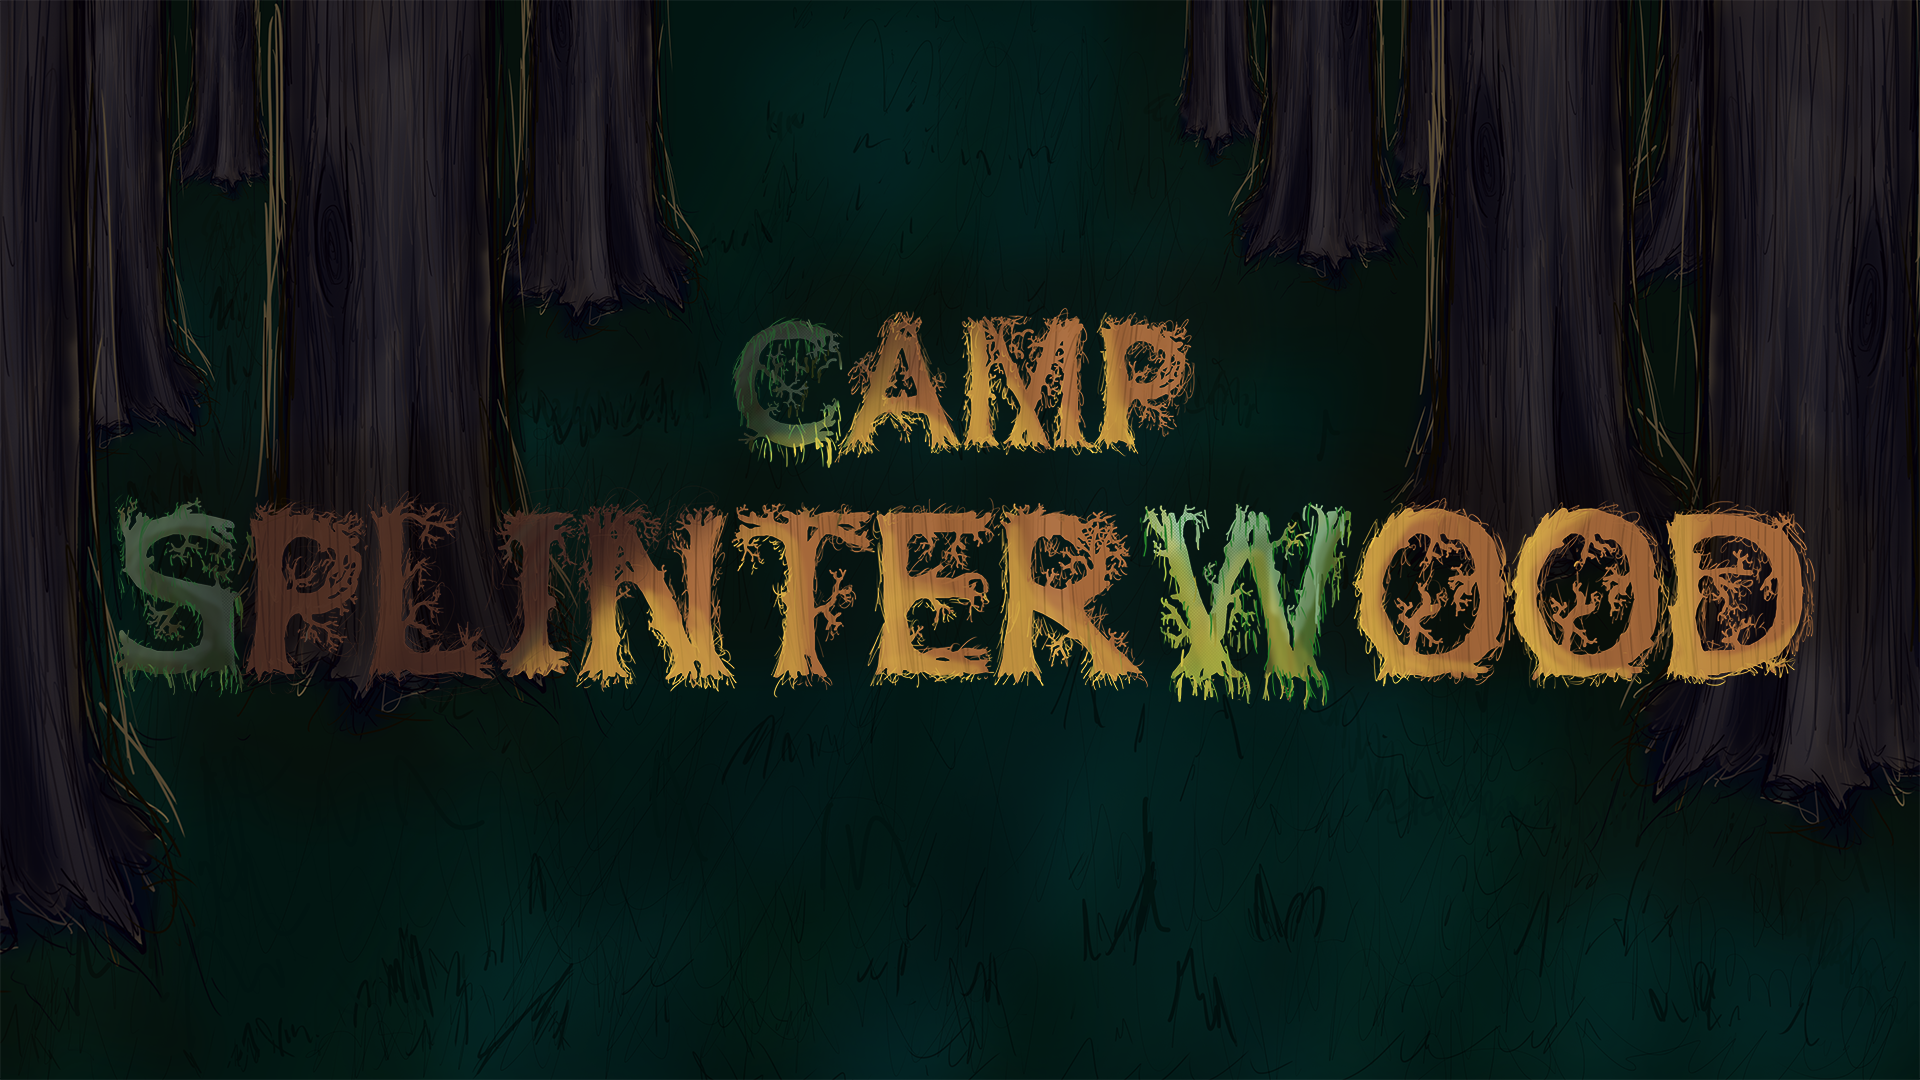 Camp Splinterwood